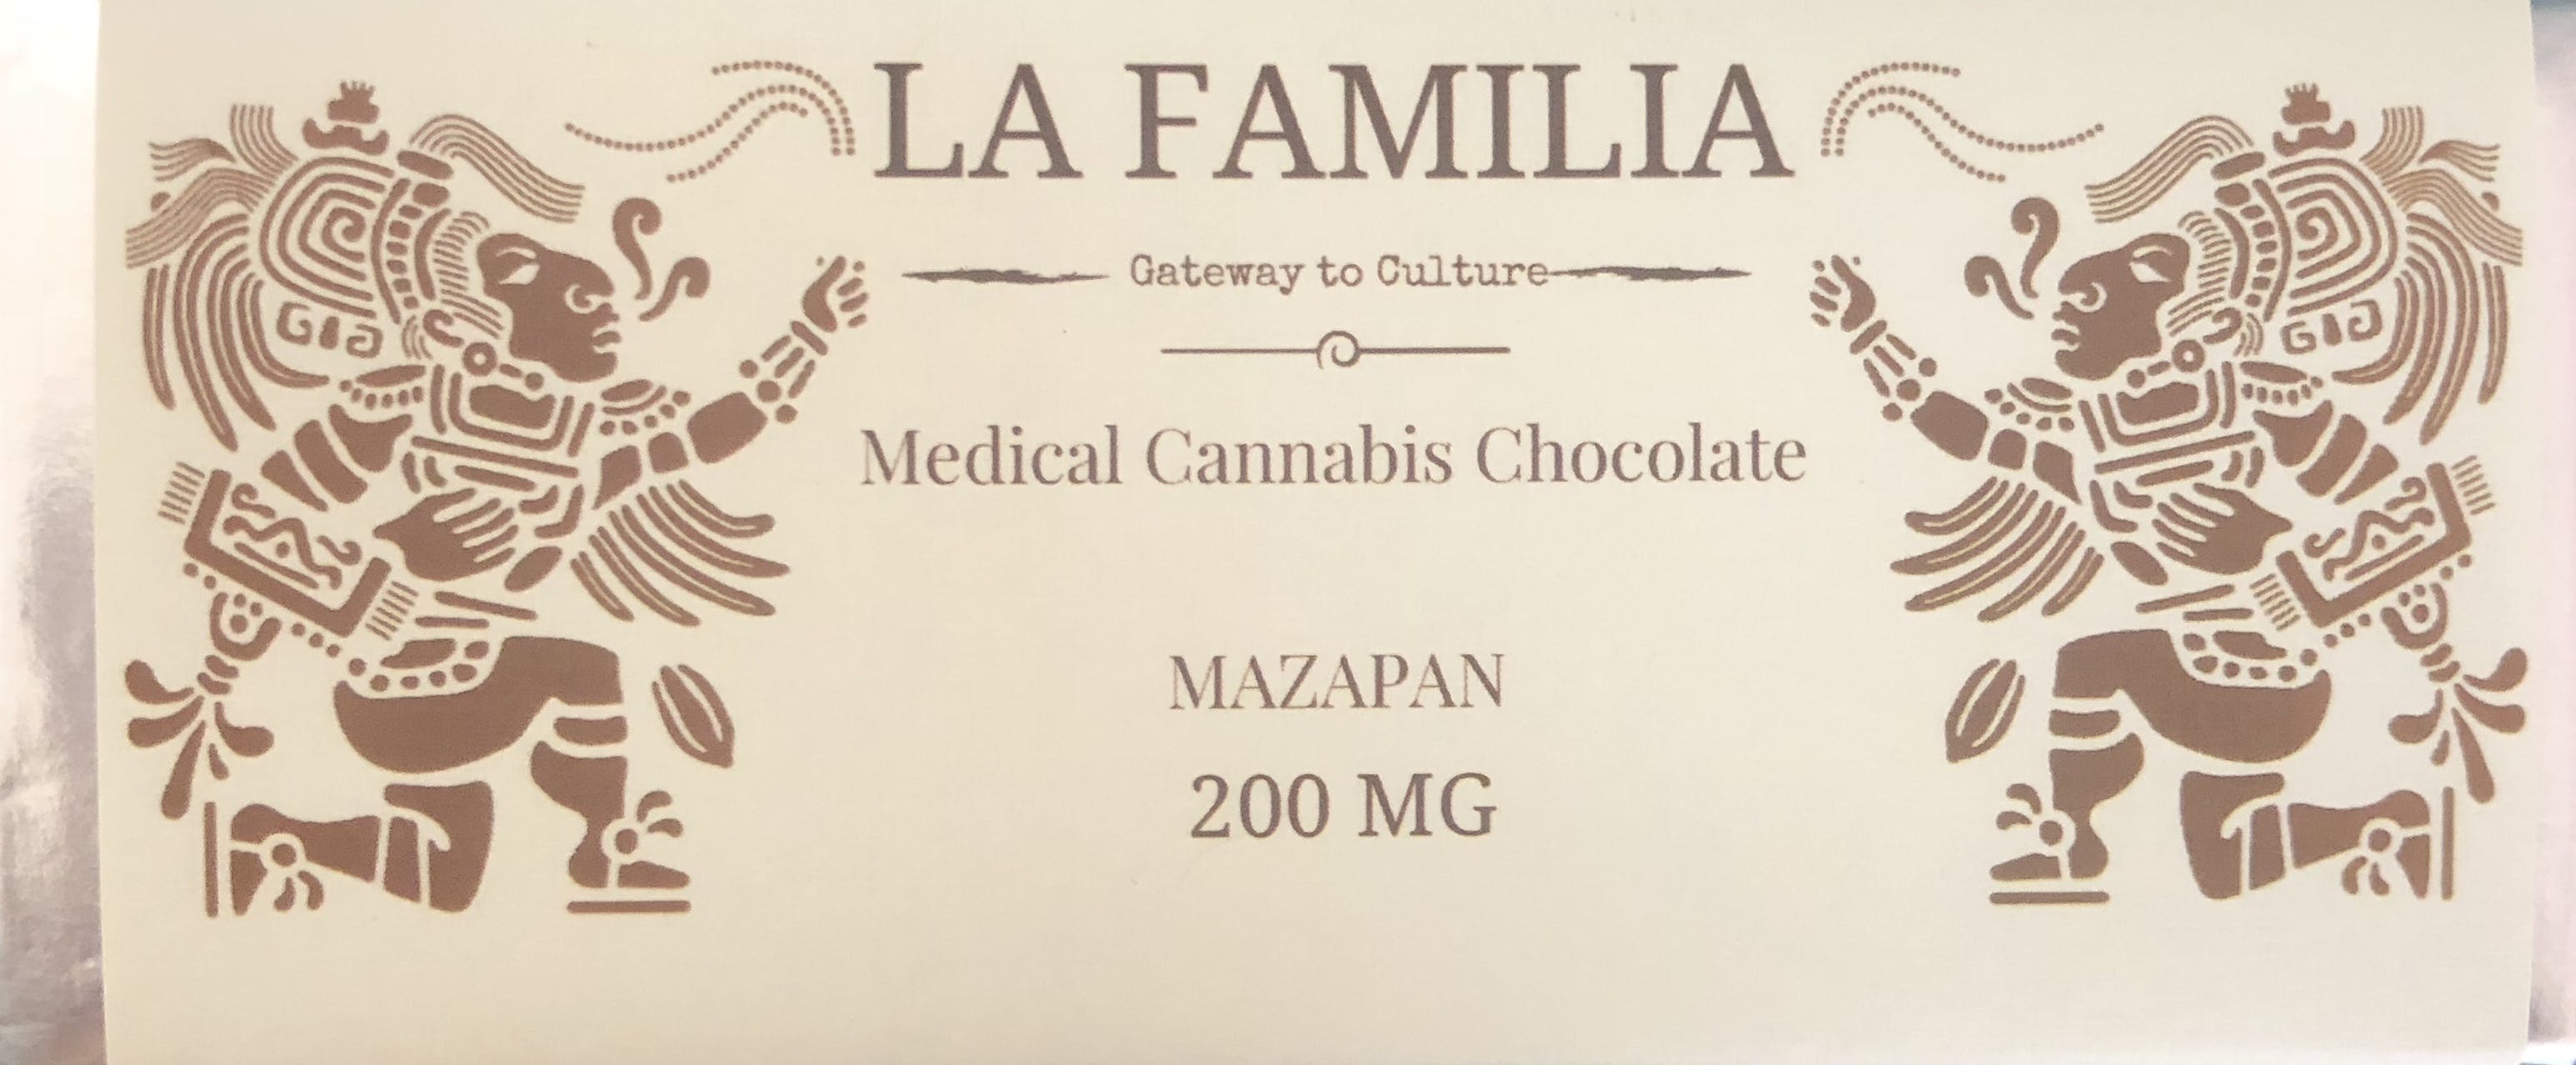 marijuana-dispensaries-420-friends-in-temecula-la-familia-200mg-mazapan